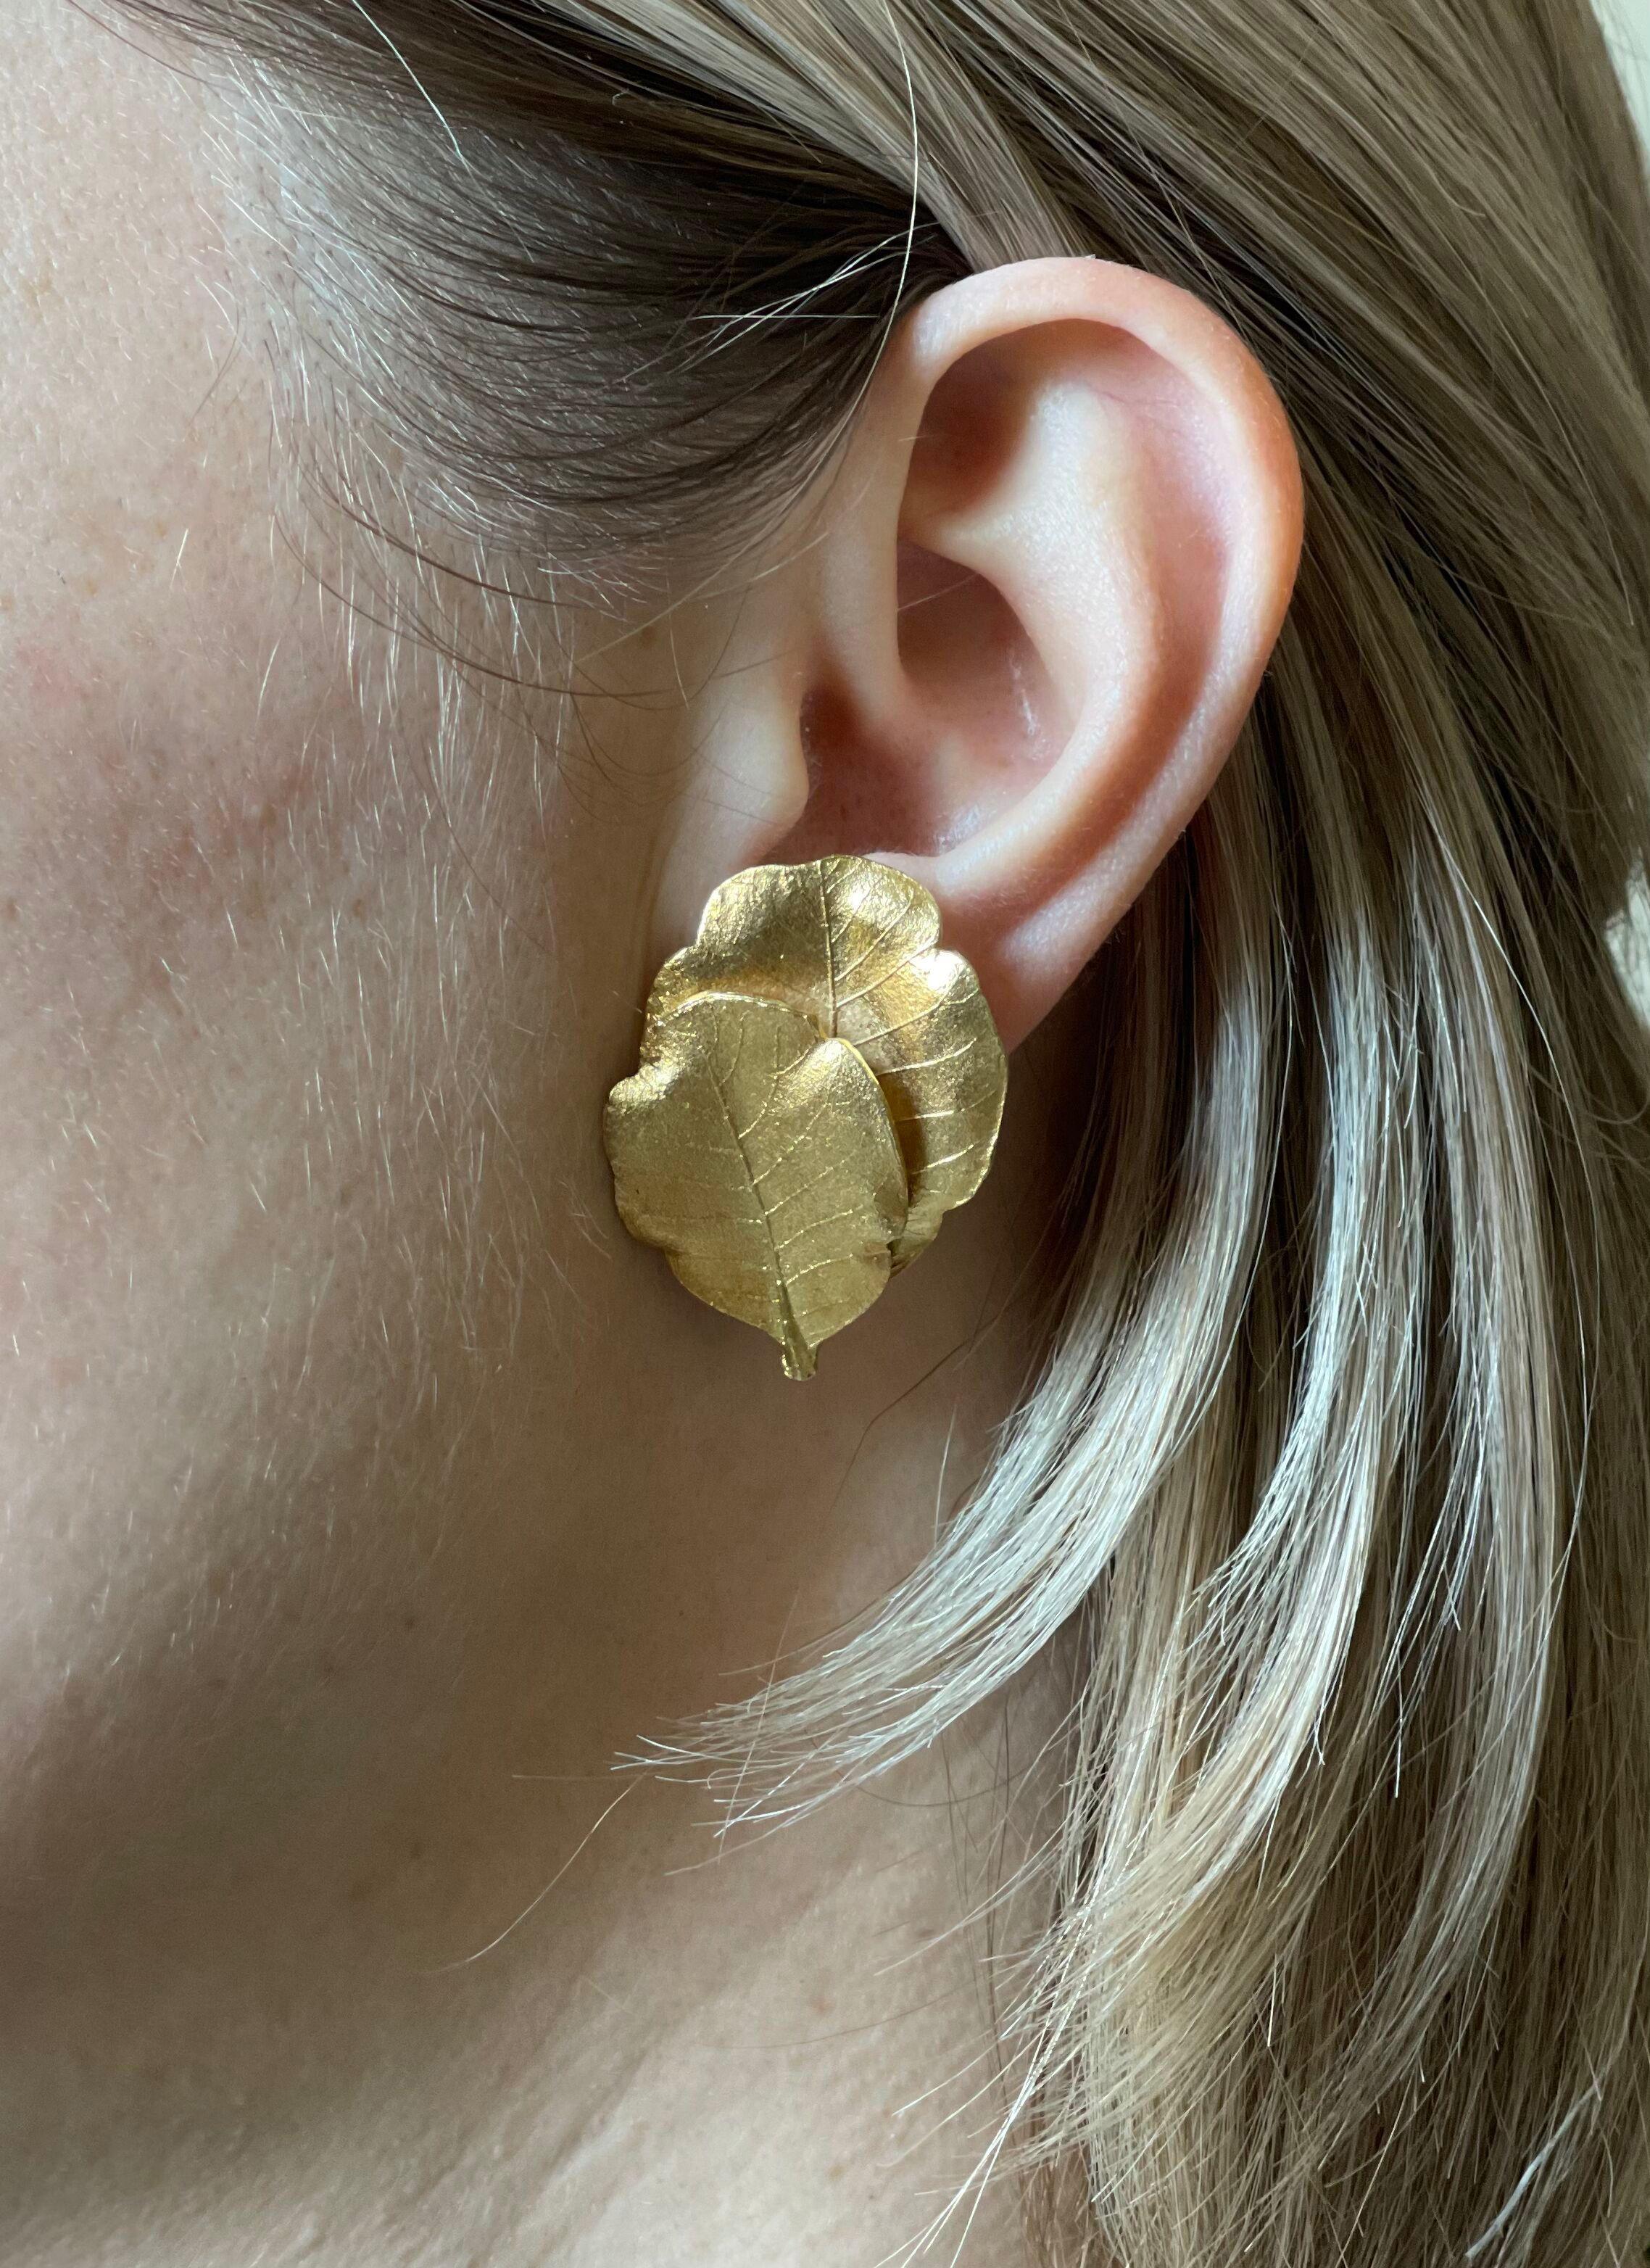 Greek made 18k gold leaf motif earrings, measuring 1.5